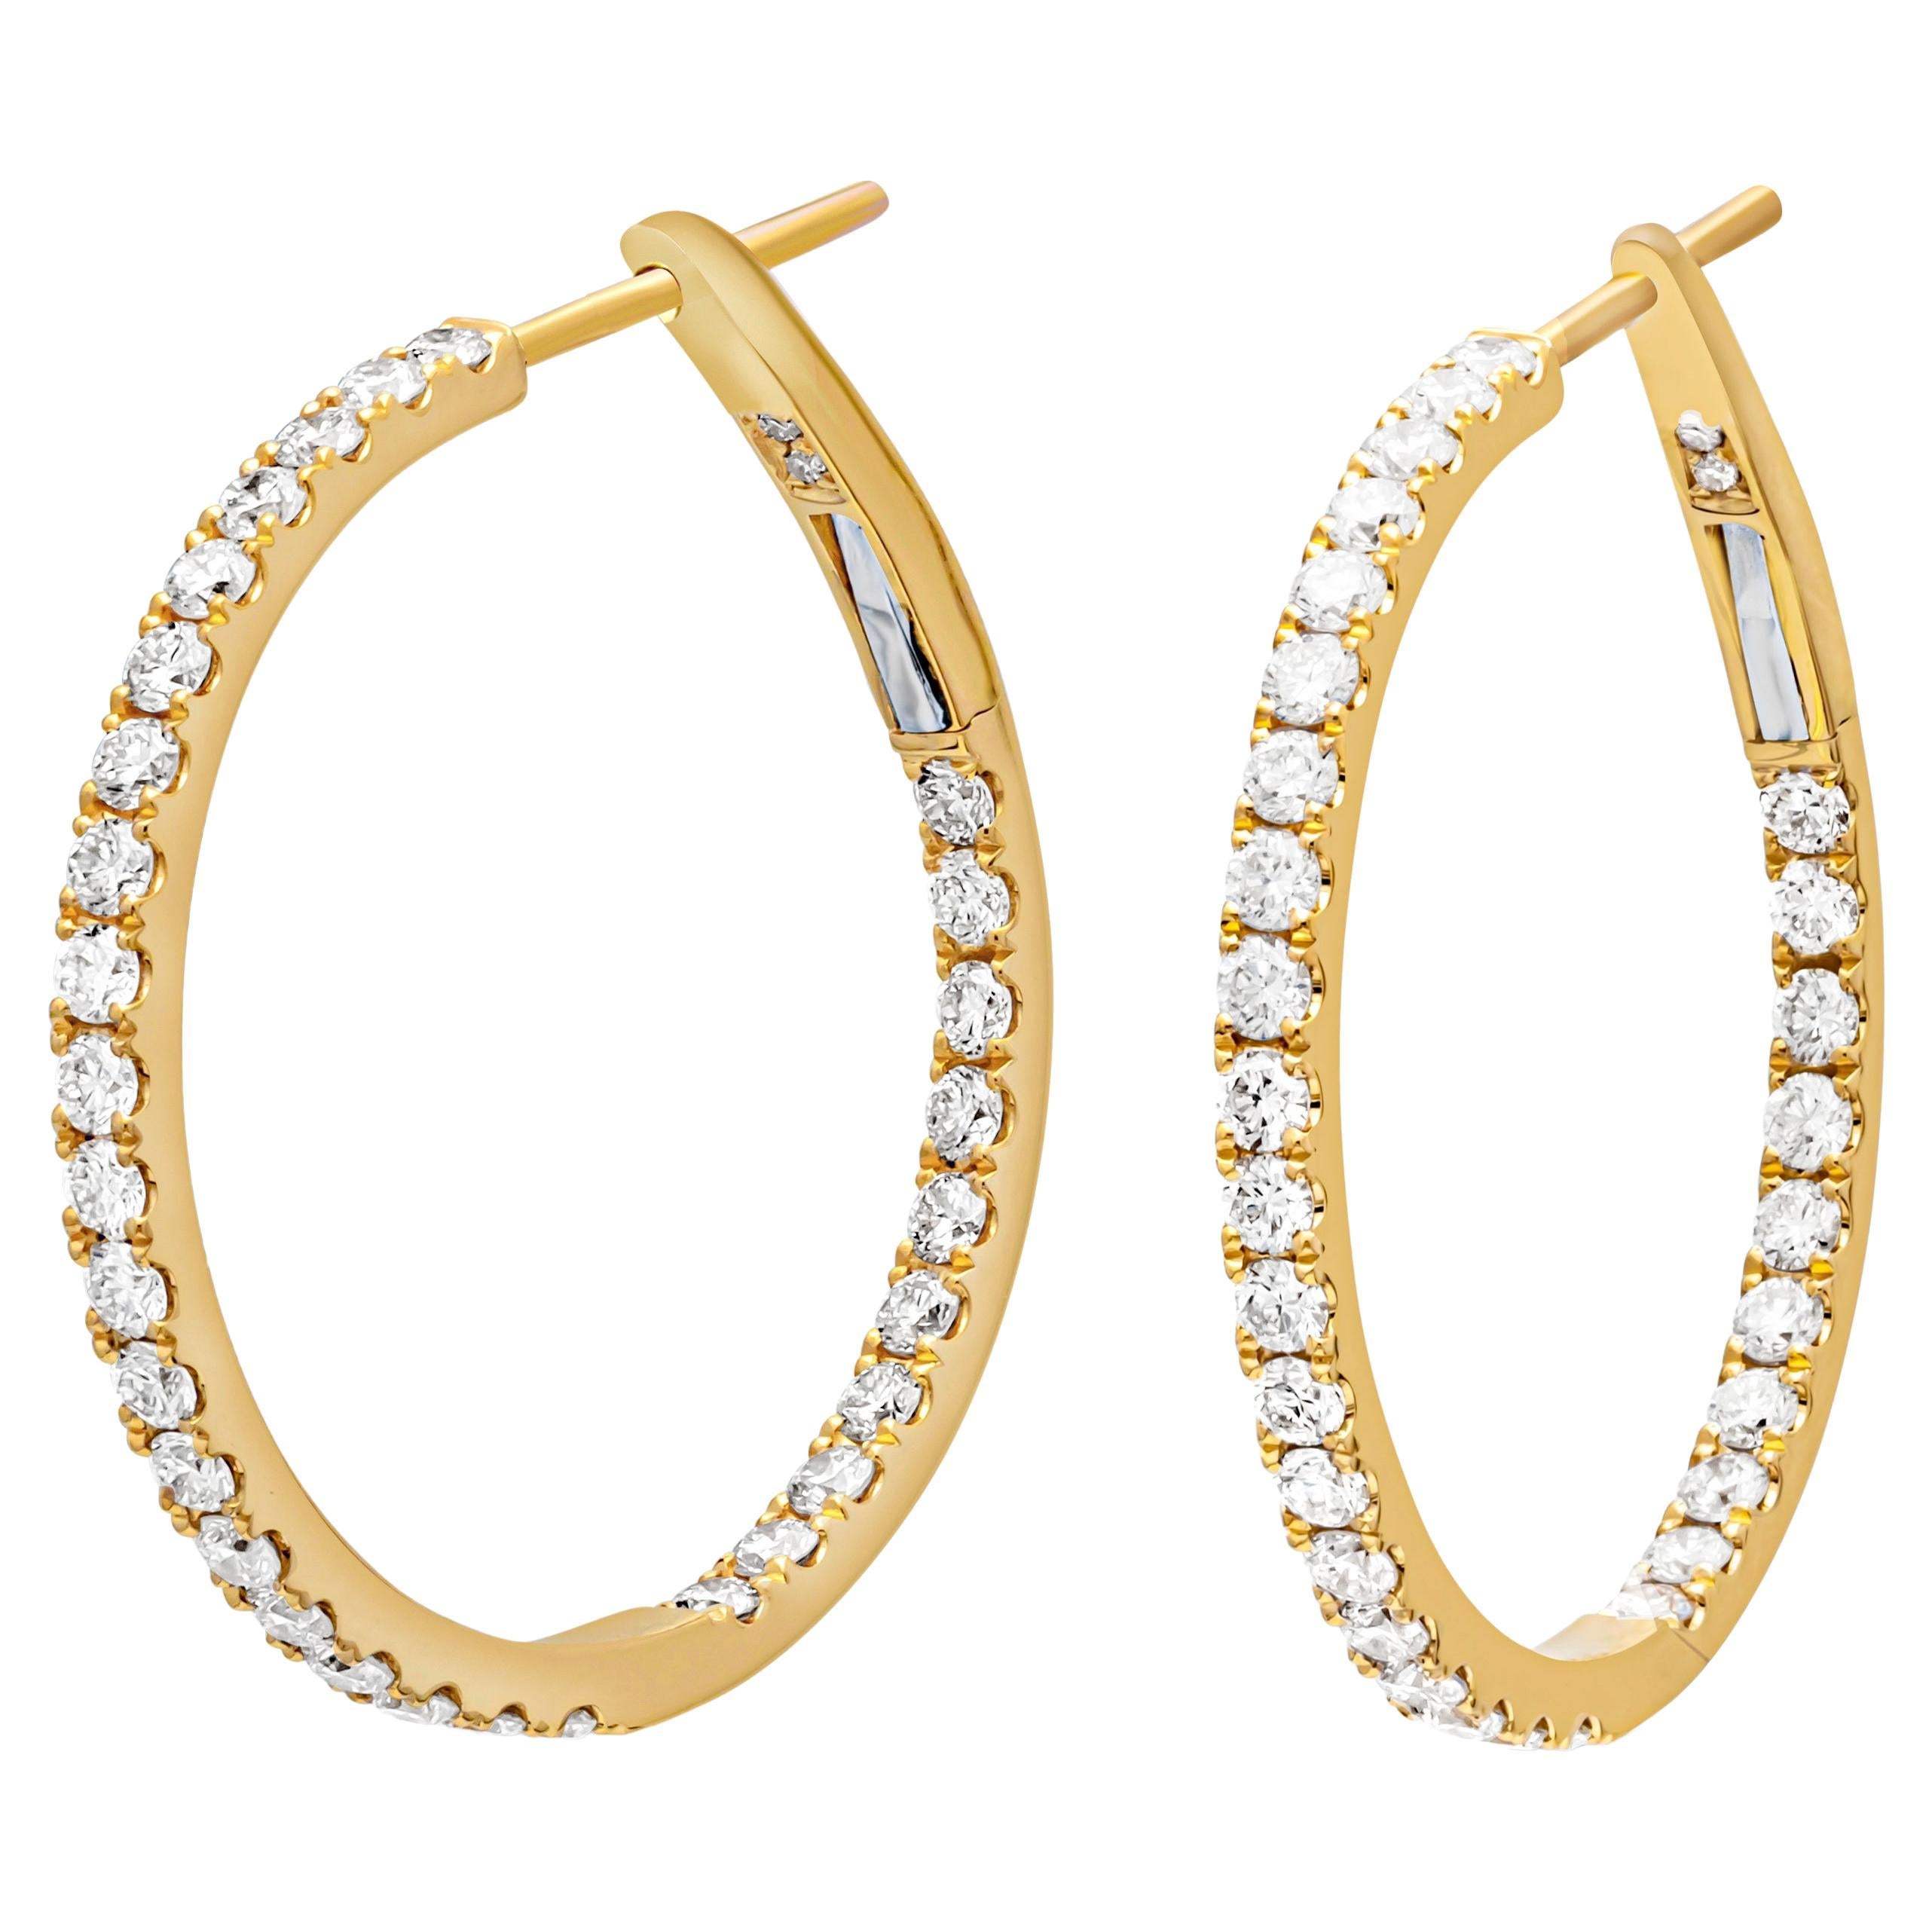 Roman Malakov 1.16 Carats Total Brilliant Round Cut Diamond Hoop Earrings For Sale